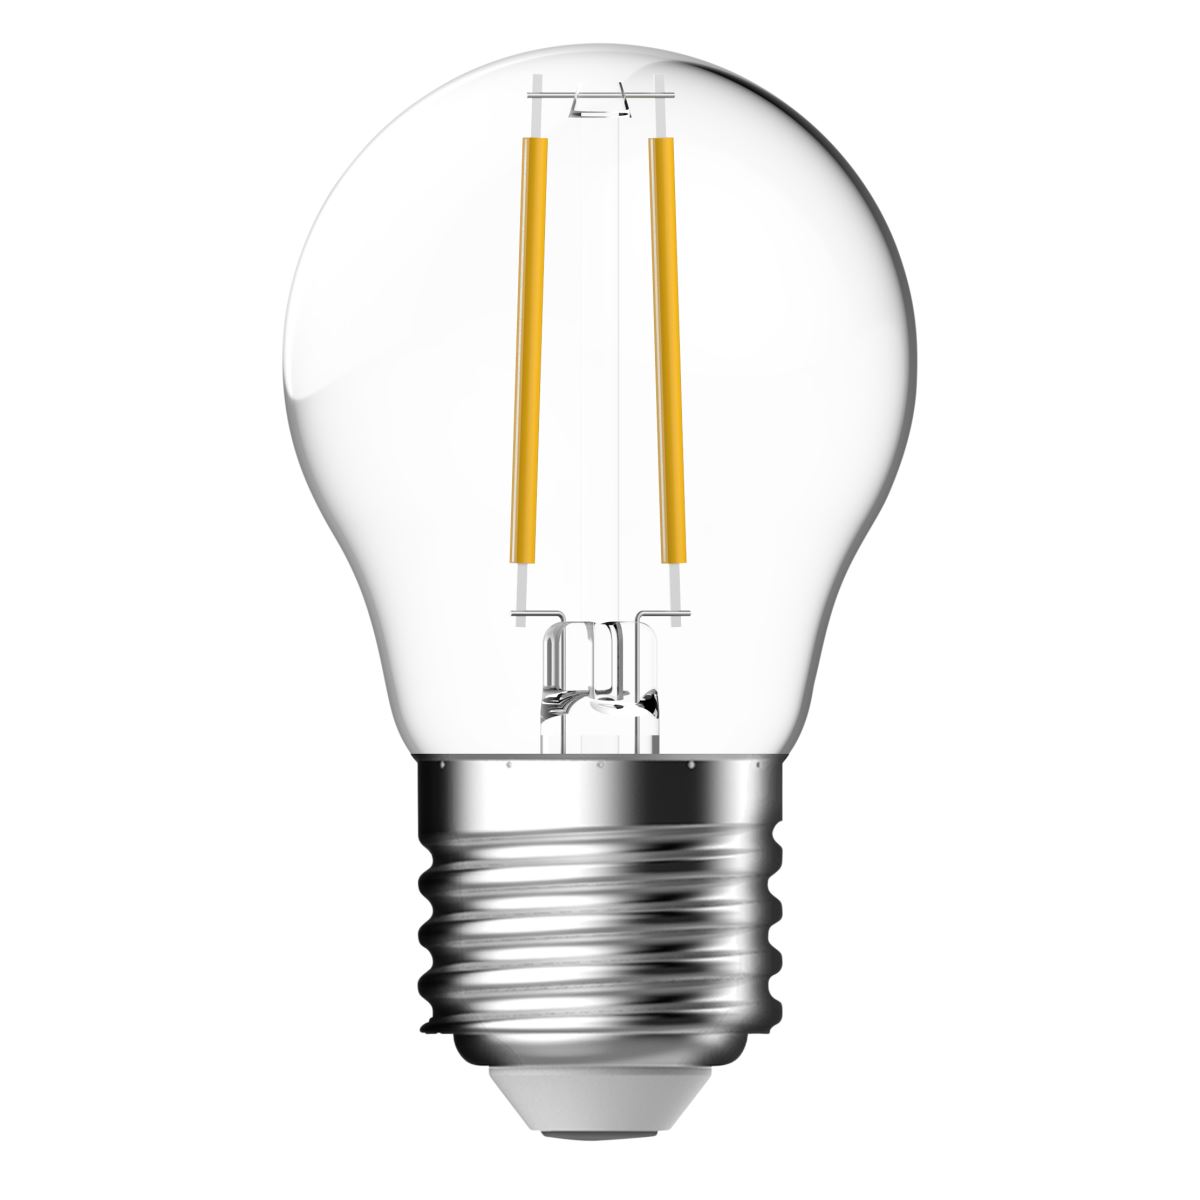 Nordlux Energetic LED Leuchtmittel E27 G45 Filament klar 470lm 2700K 4,8W 80Ra 360° dimmbar 4,5x4,5x7,9cm von Energetic